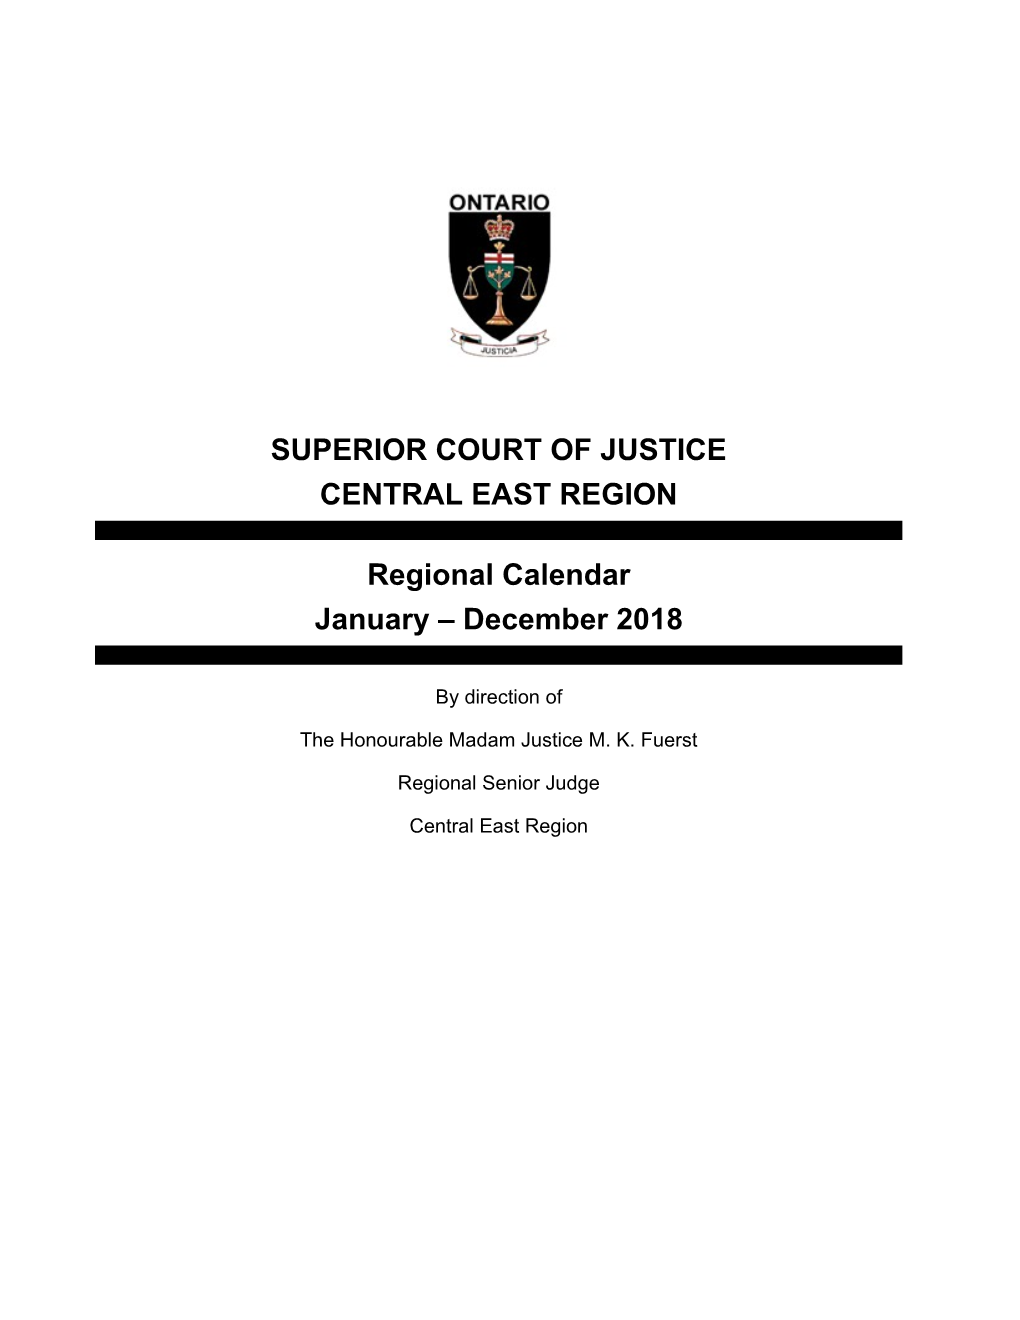 Central East Regional Calendar - January to December 2018